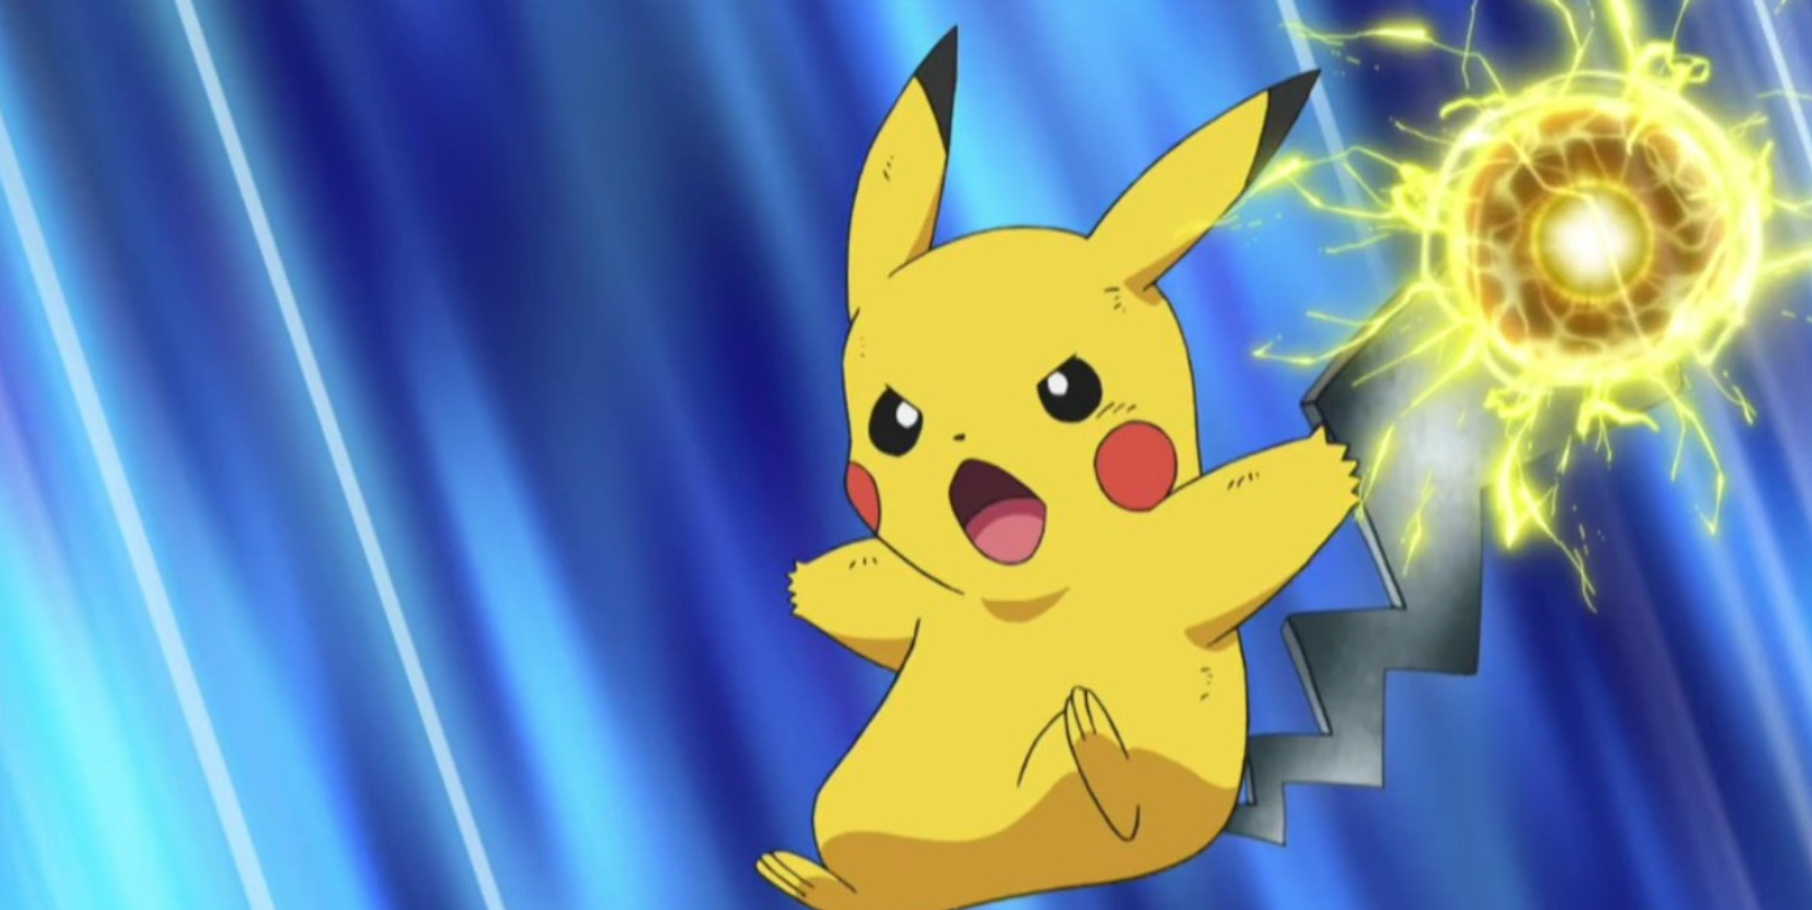 Pokemon Pikachu Performing Electro Ball in battle